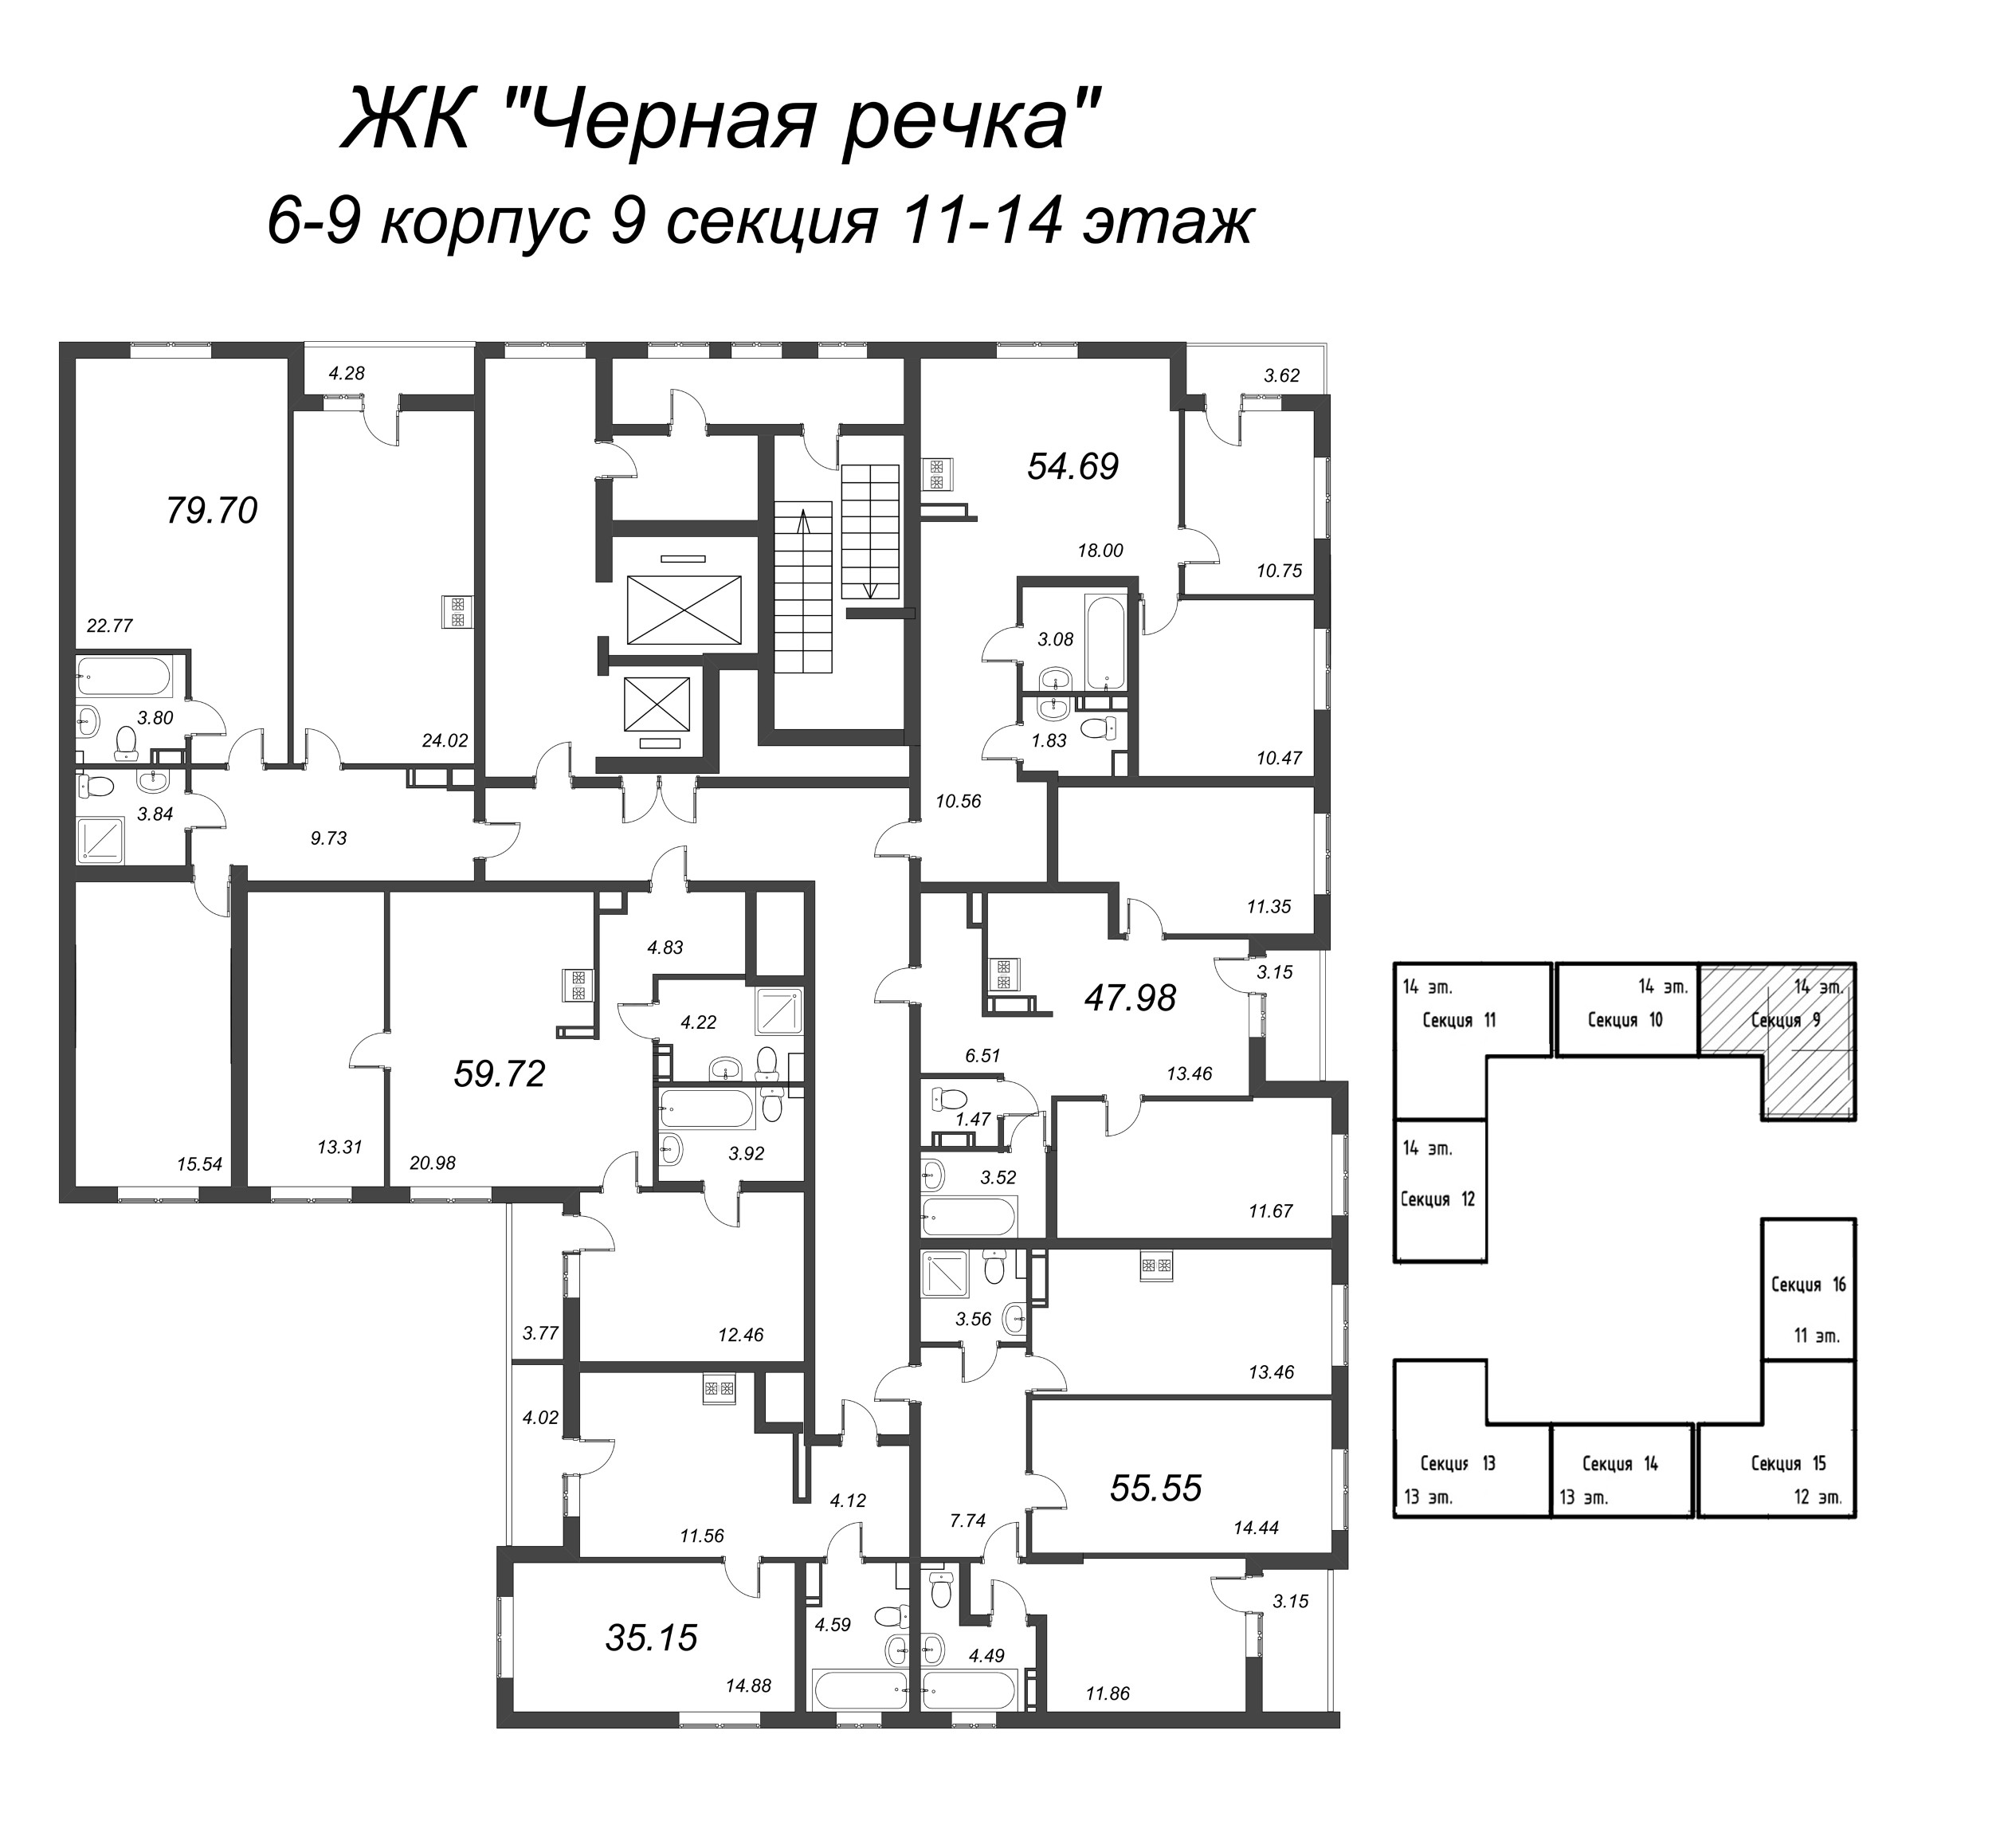 2-комнатная квартира, 55.55 м² в ЖК "Чёрная речка от Ильича" - планировка этажа